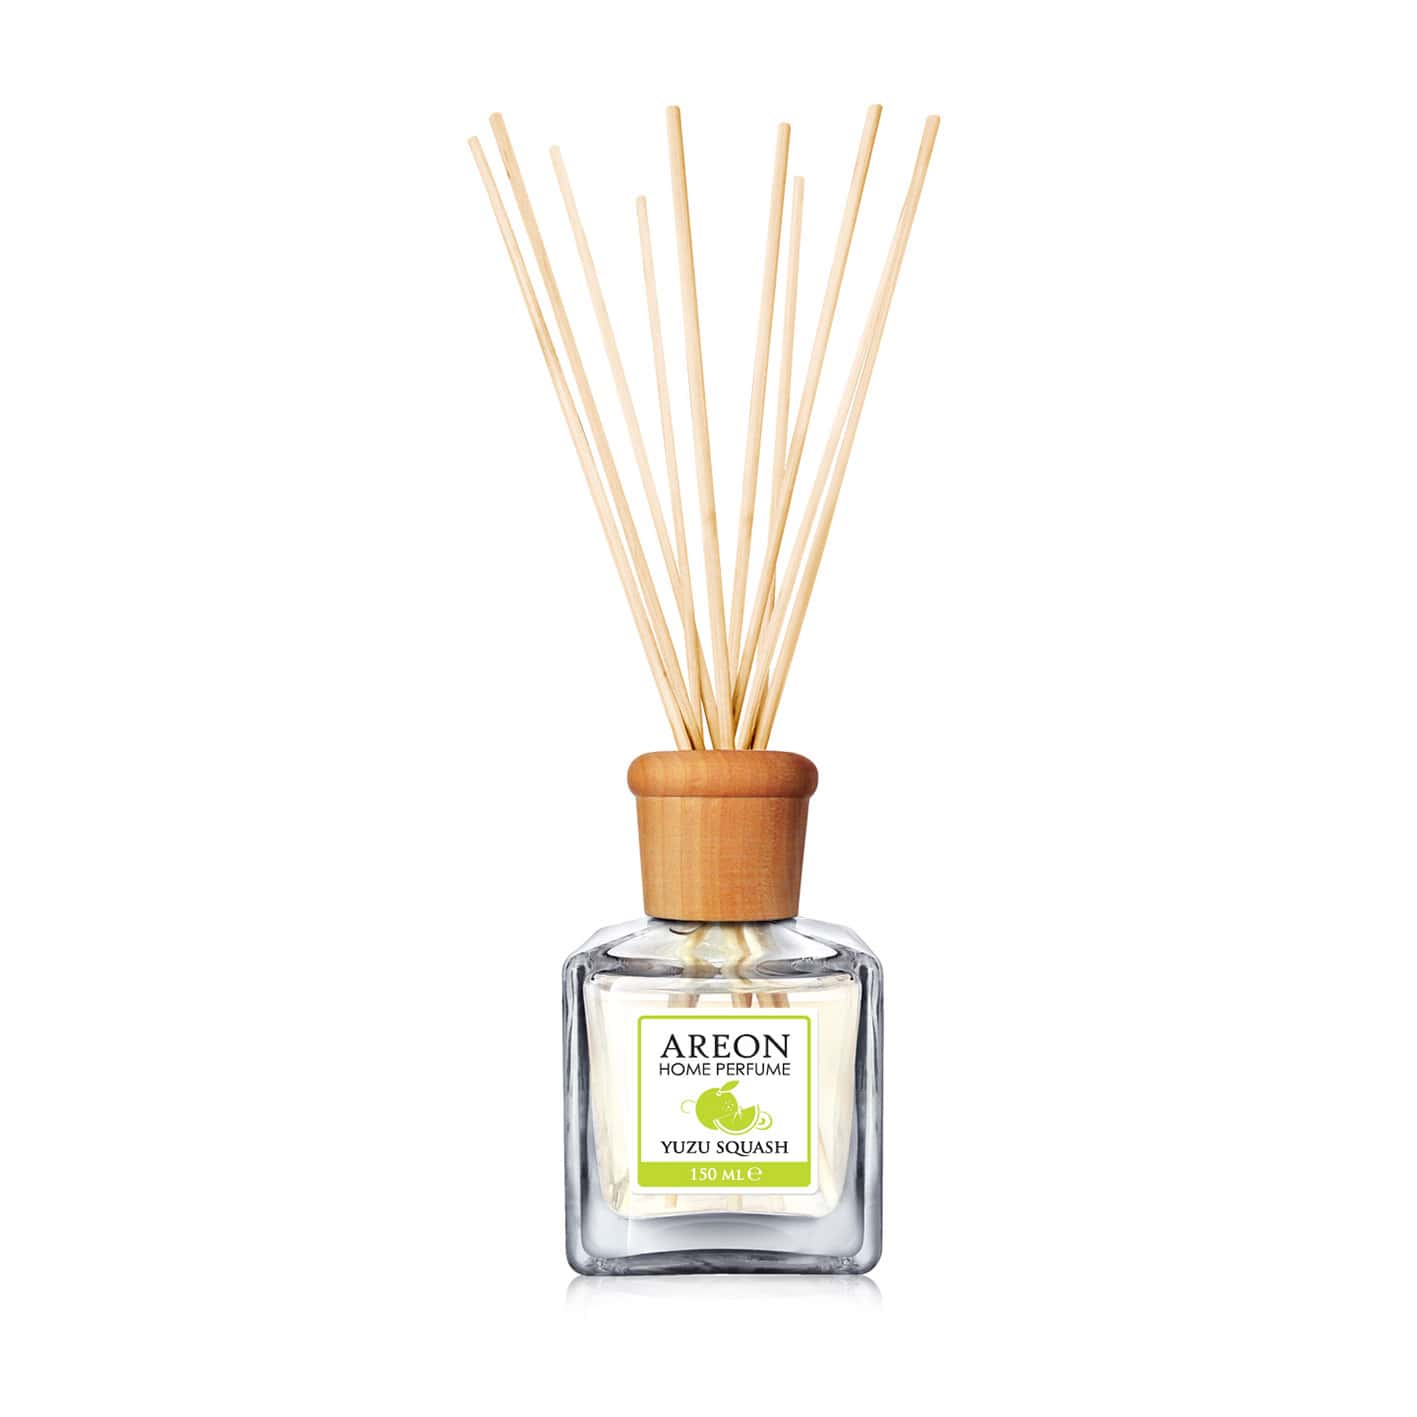 Areon Perfume Sticks 150 ml - Yuzu Squash Scent